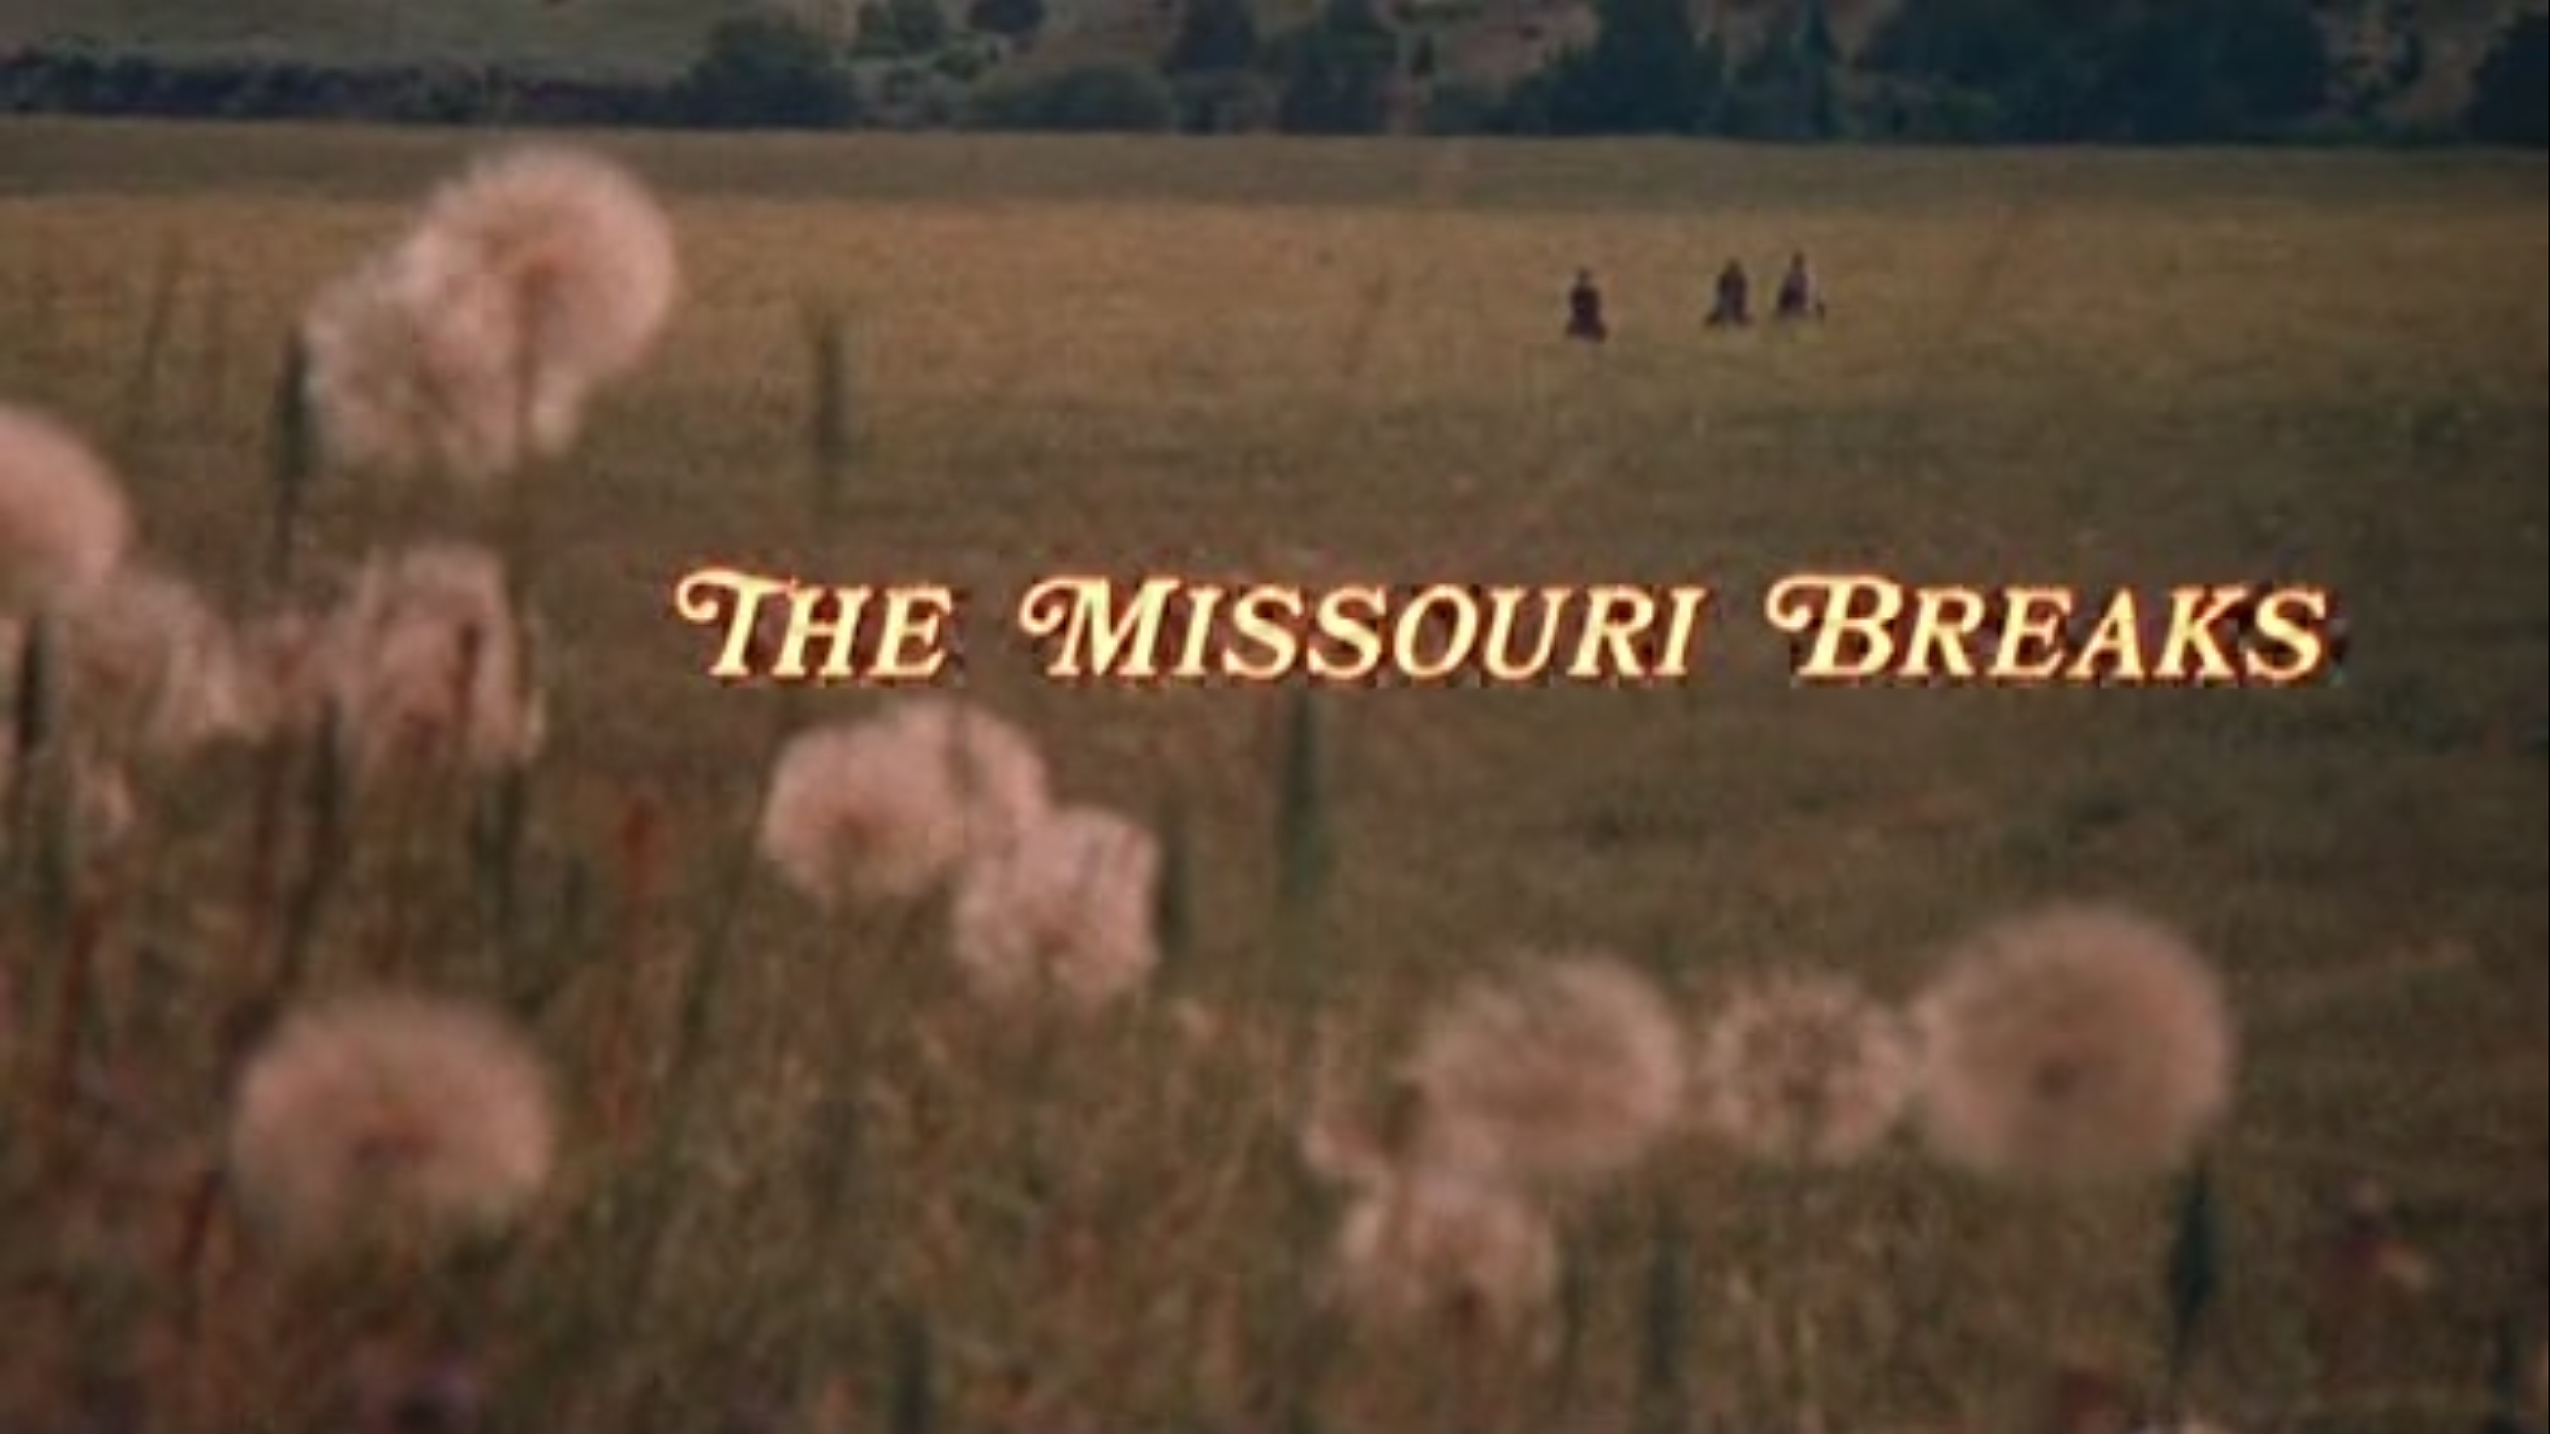 The Missouri Breaks opening